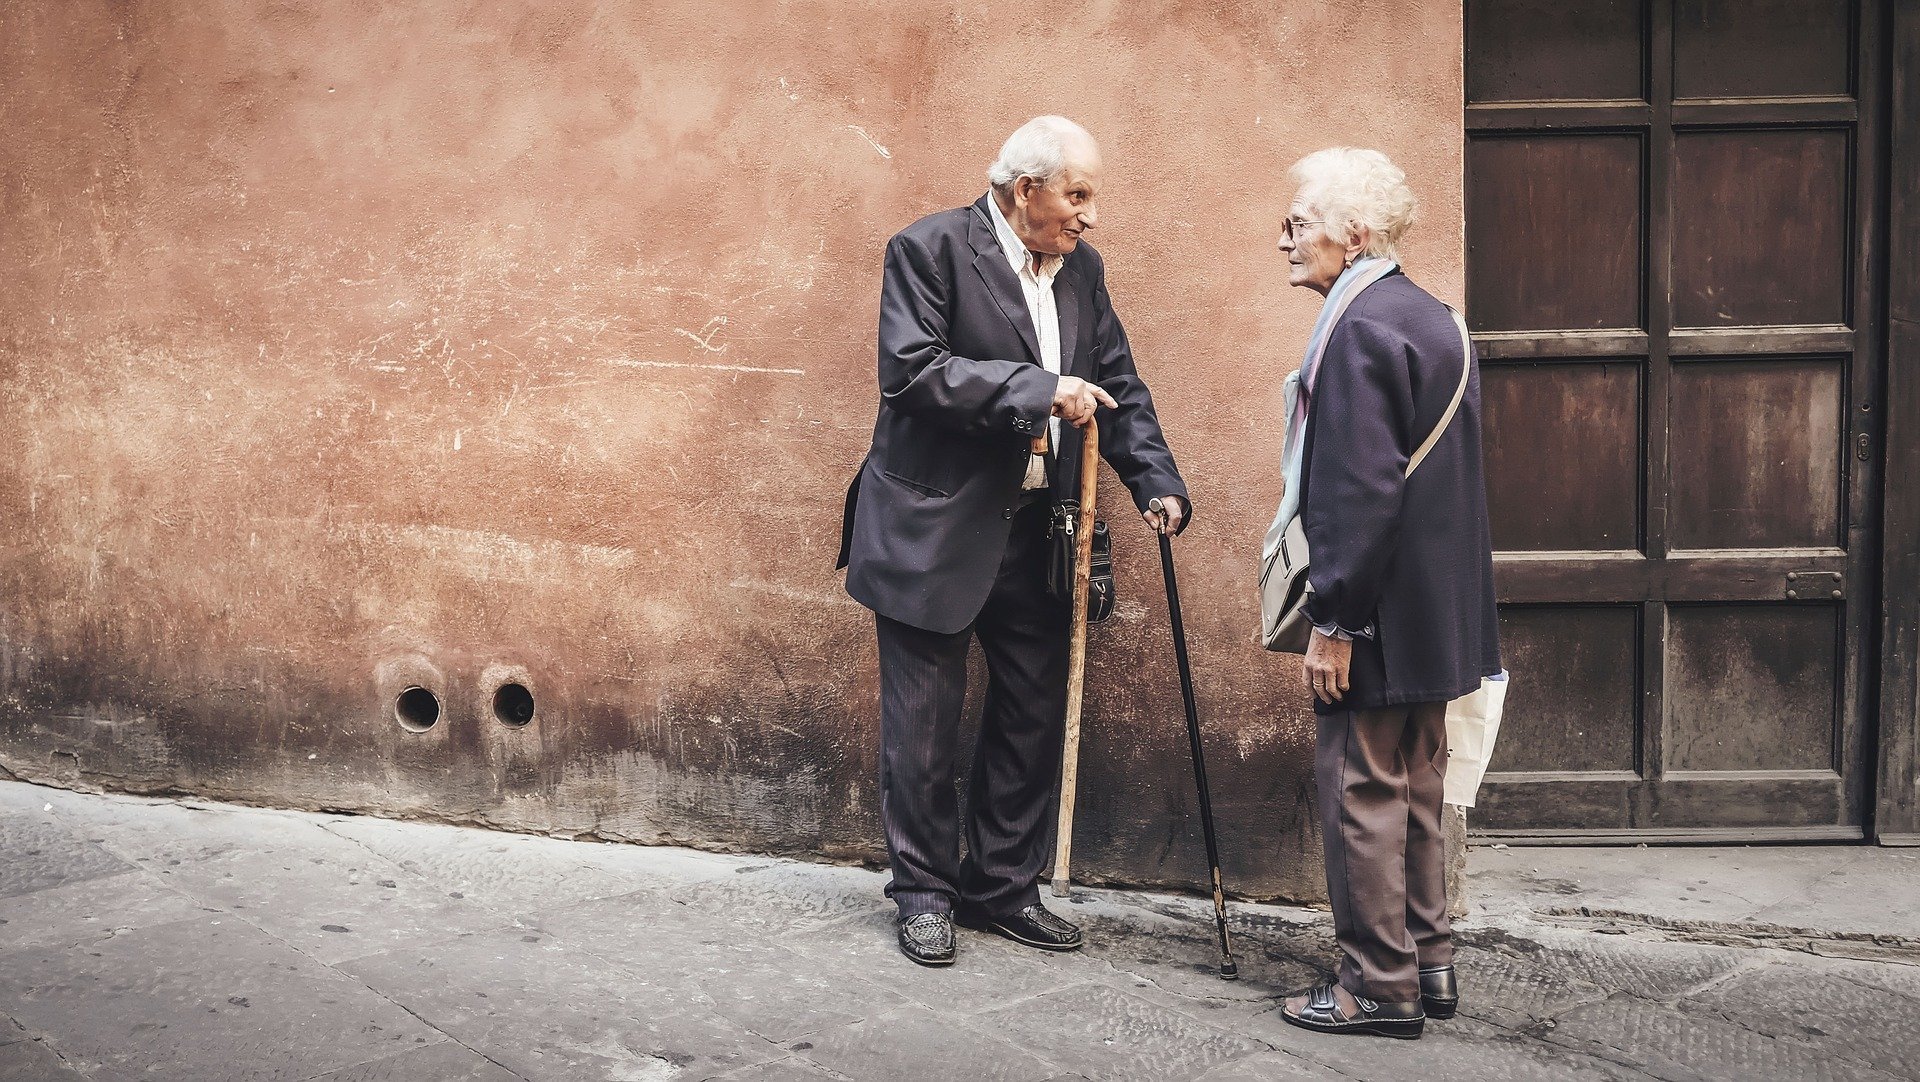 Senior couple on the street. | Source: Pixabay